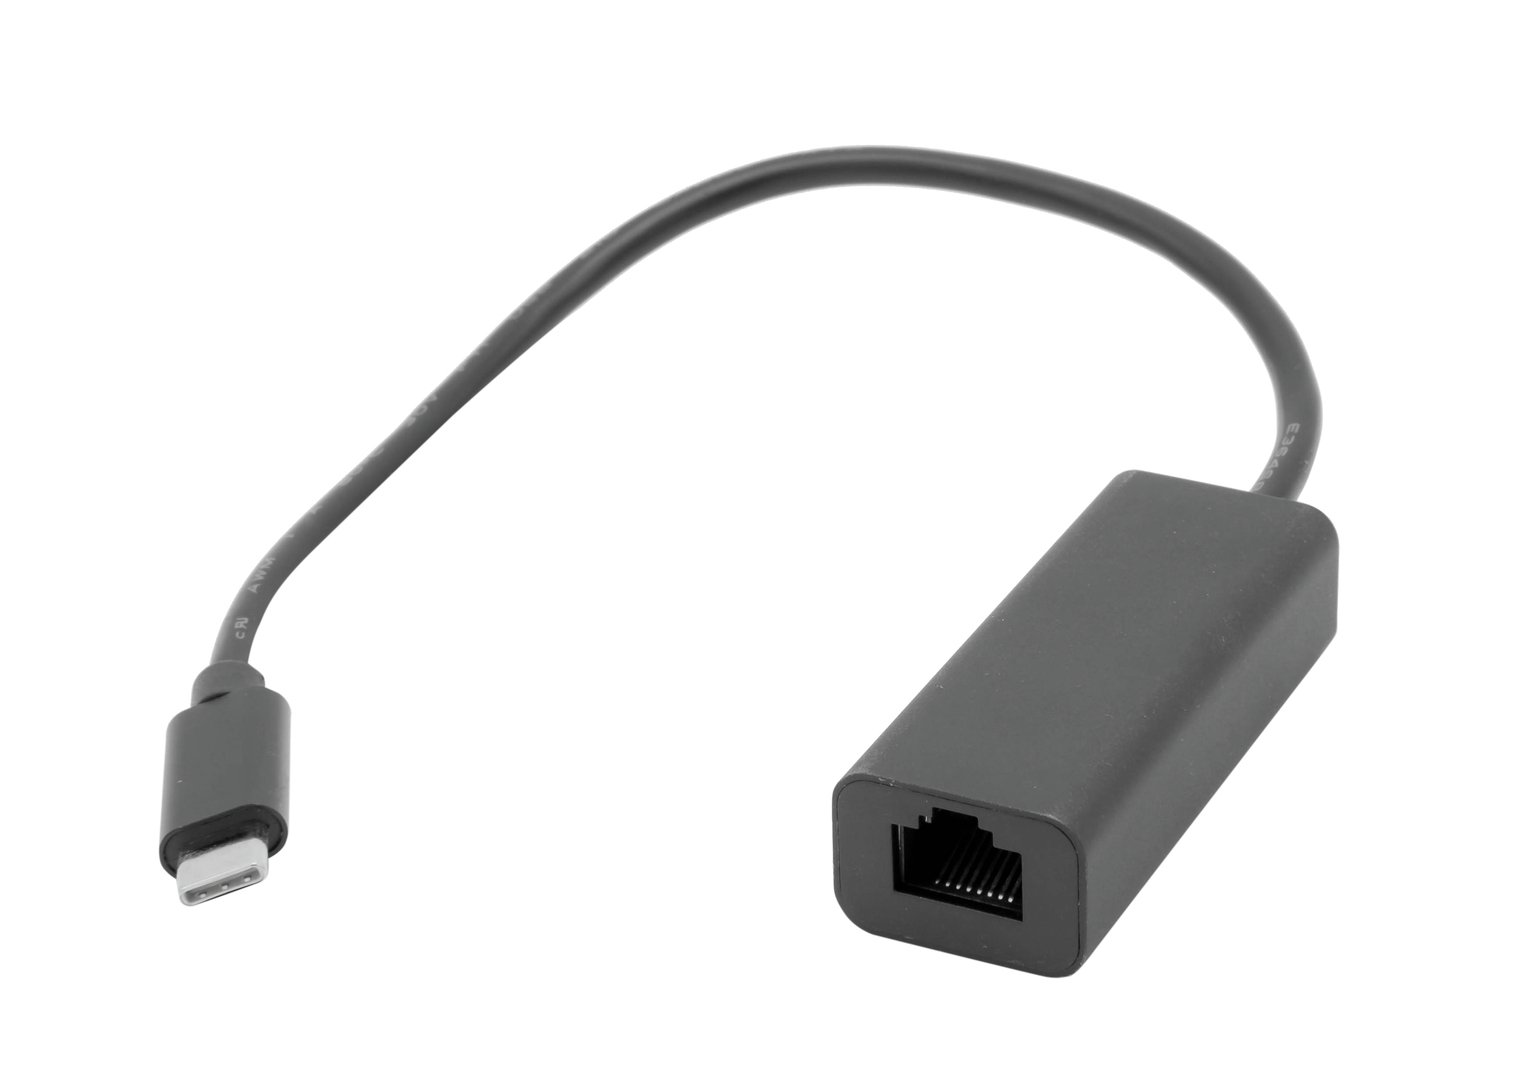 Dynamode USB-C LAN Adaptor Review